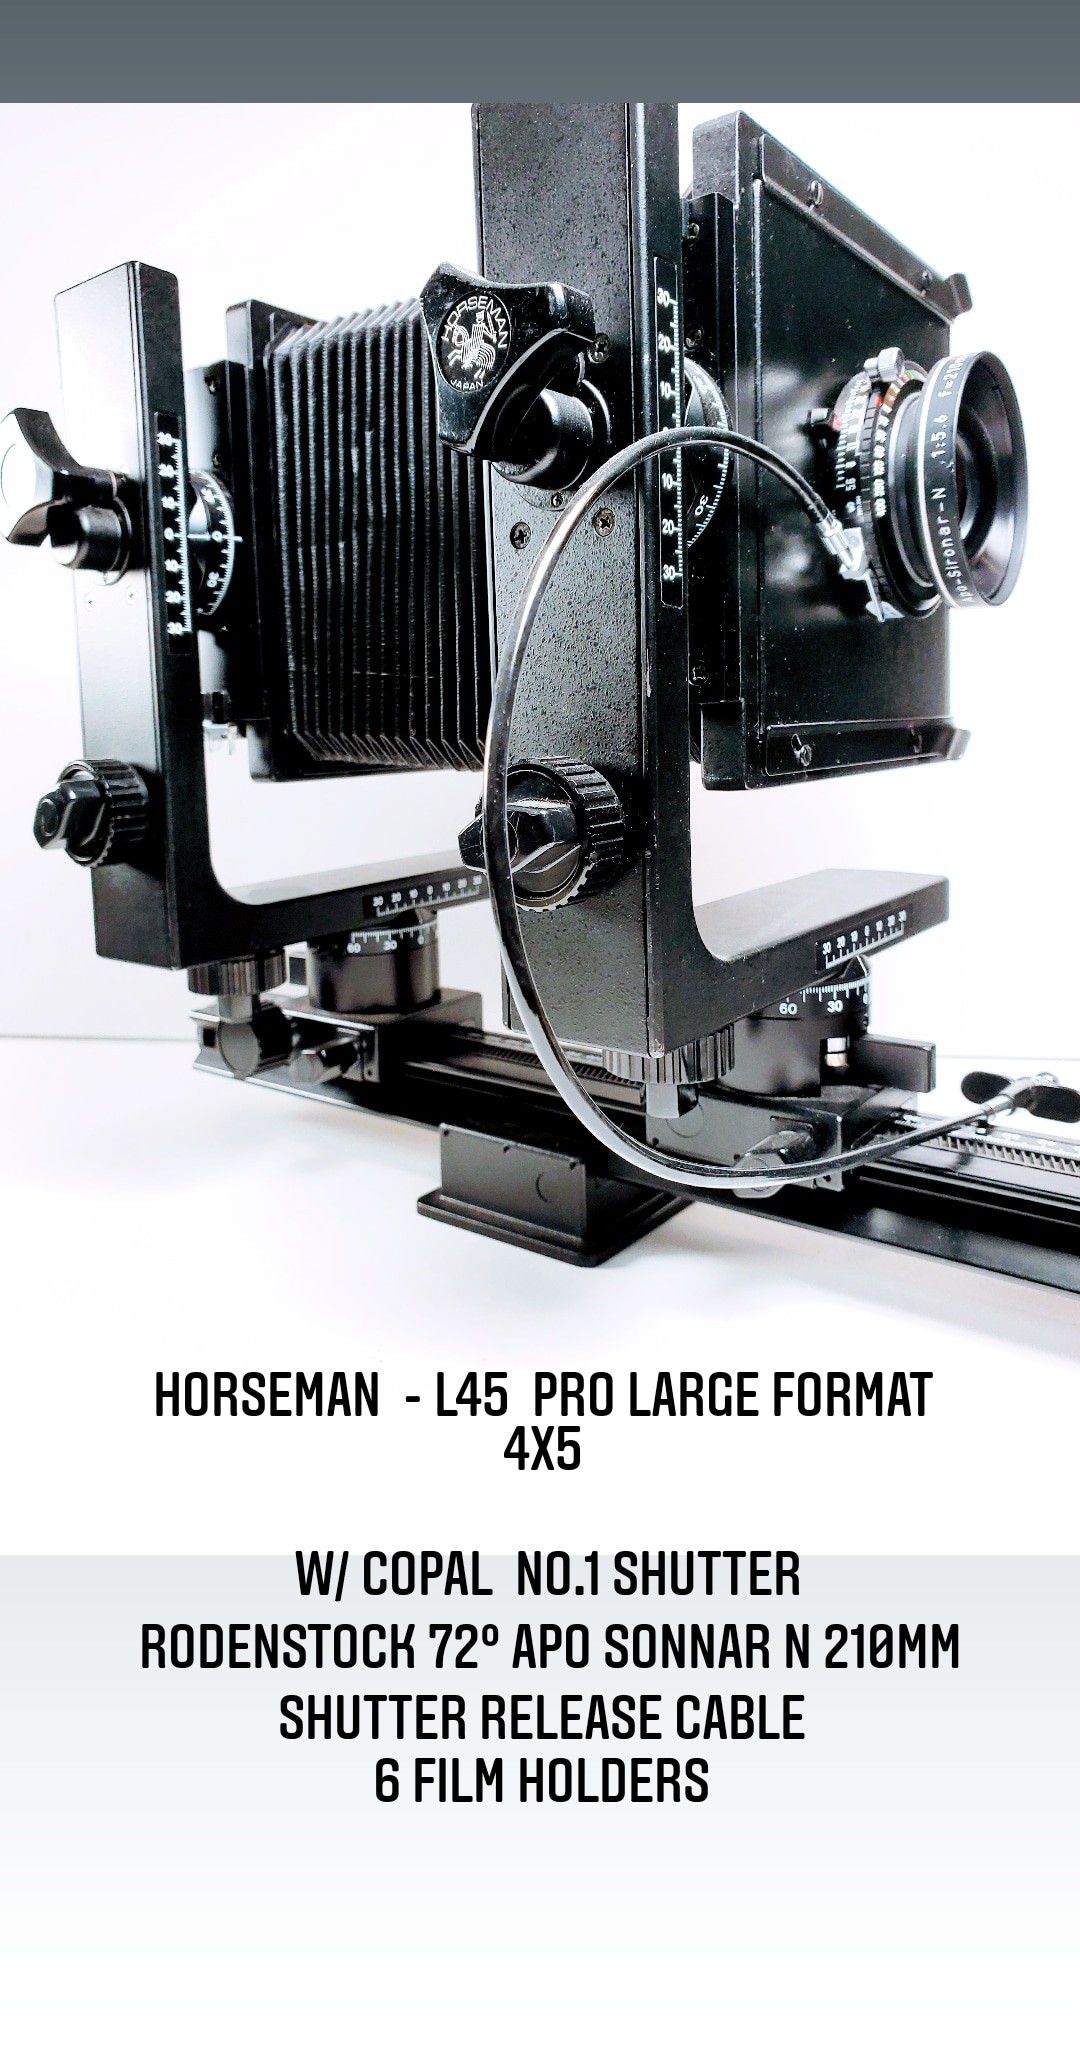 HORSEMAN L45 PRO - 4x5 Large format